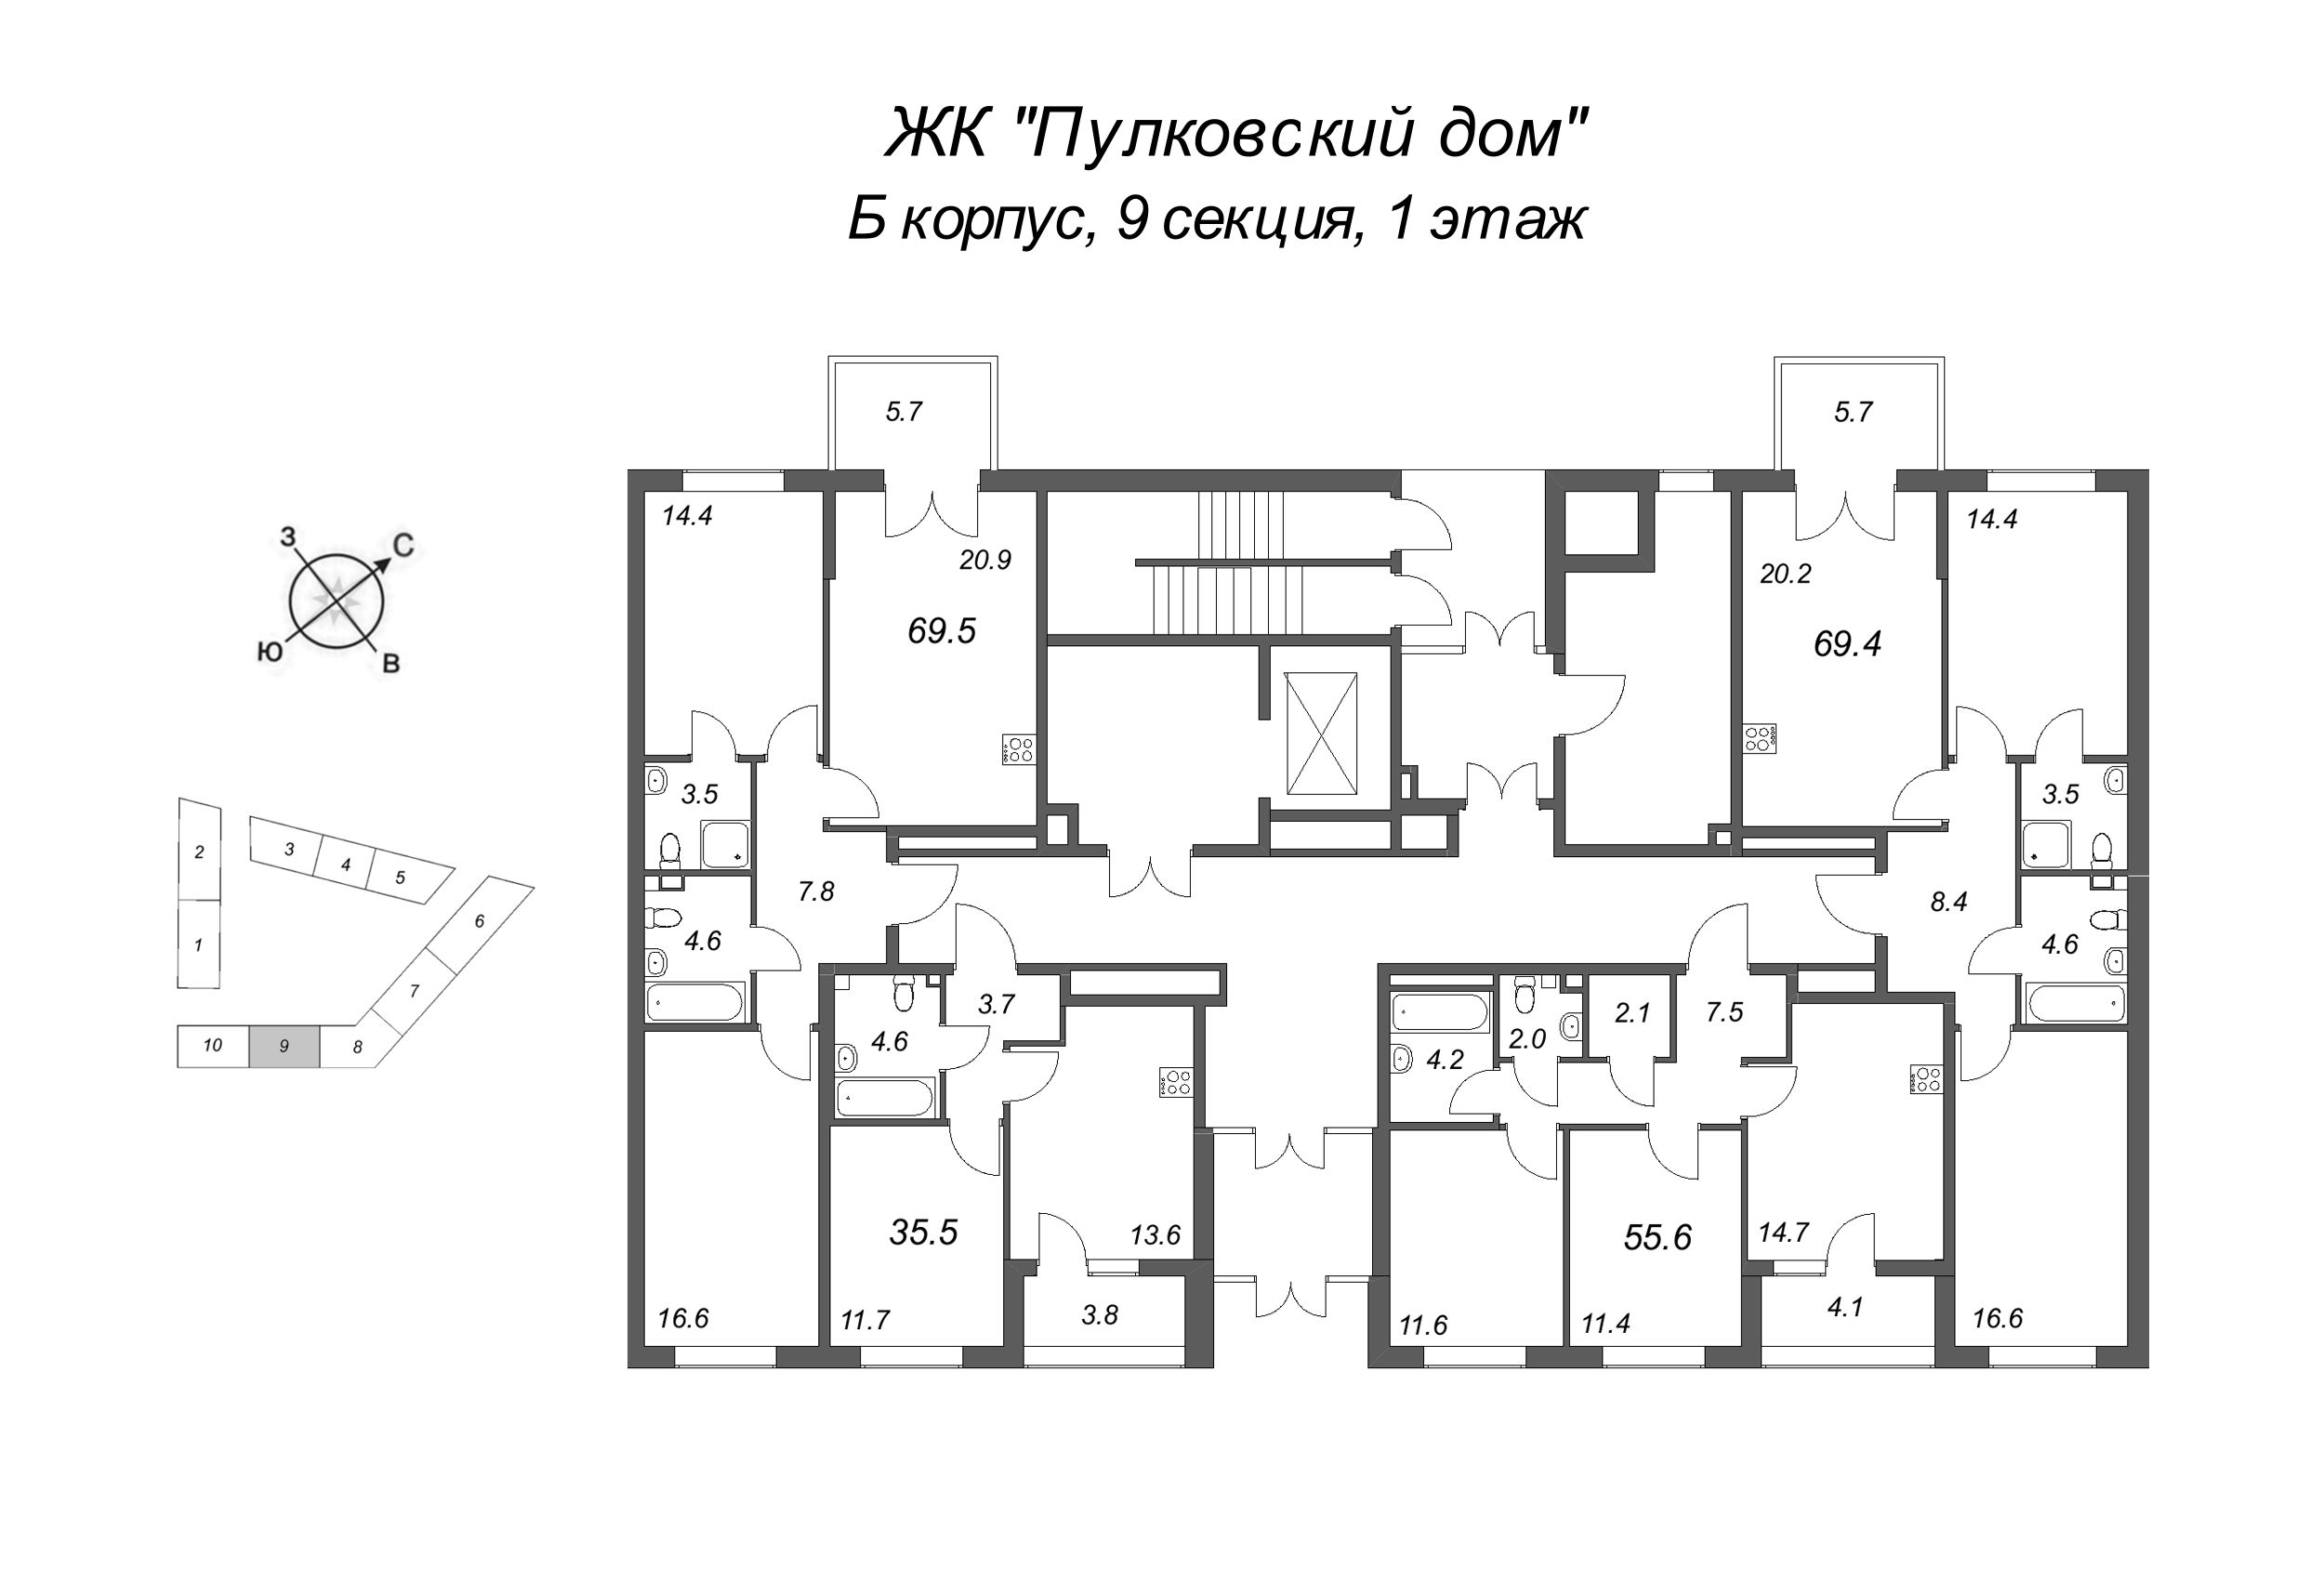 3-комнатная (Евро) квартира, 69.5 м² - планировка этажа